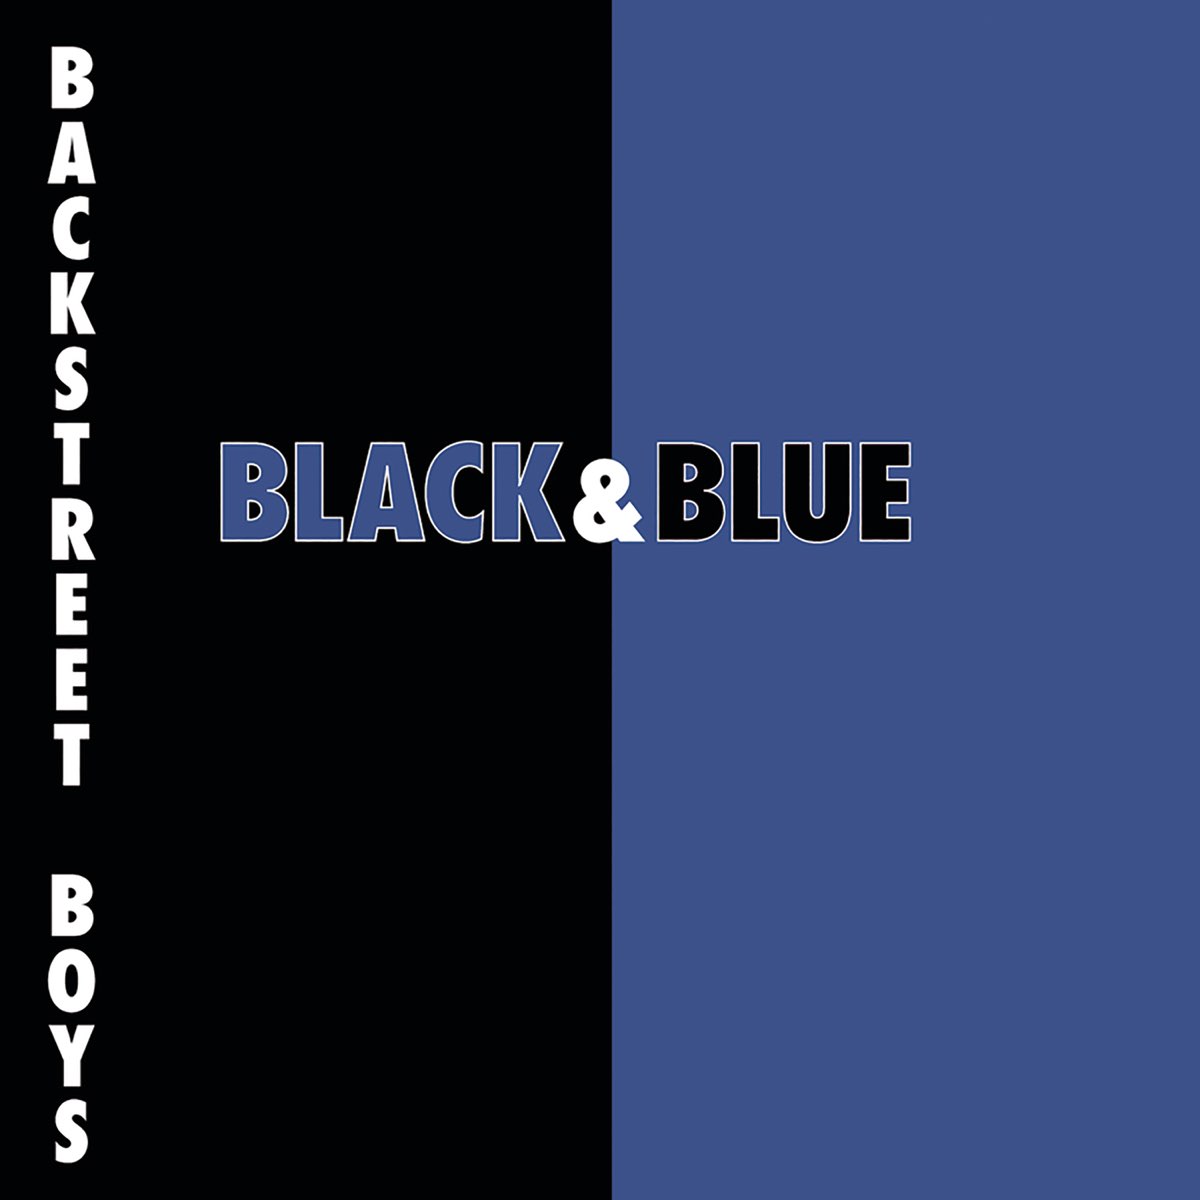 Black & Blue - Album by Backstreet Boys - Apple Music